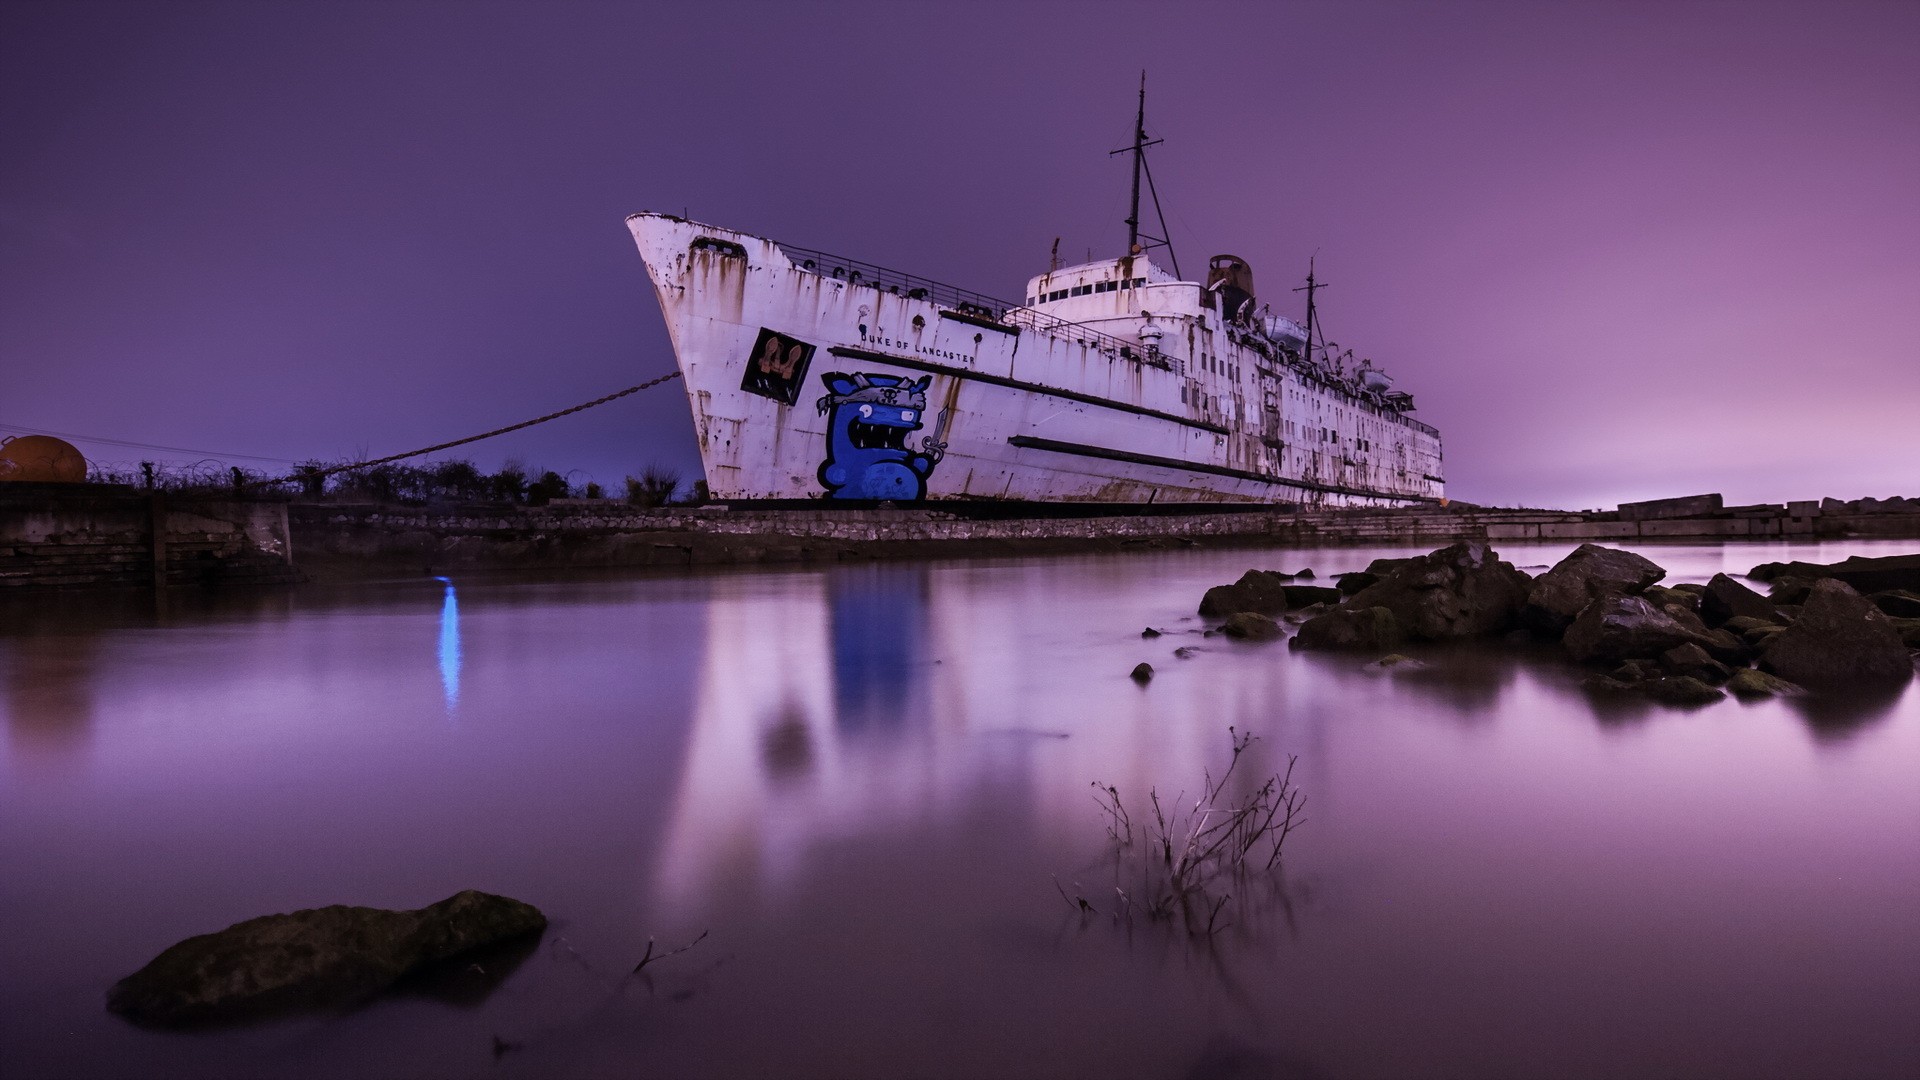 General 1920x1080 sea ship shipwreck water rocks night long exposure blurred boat graffiti chains rust vehicle wreck